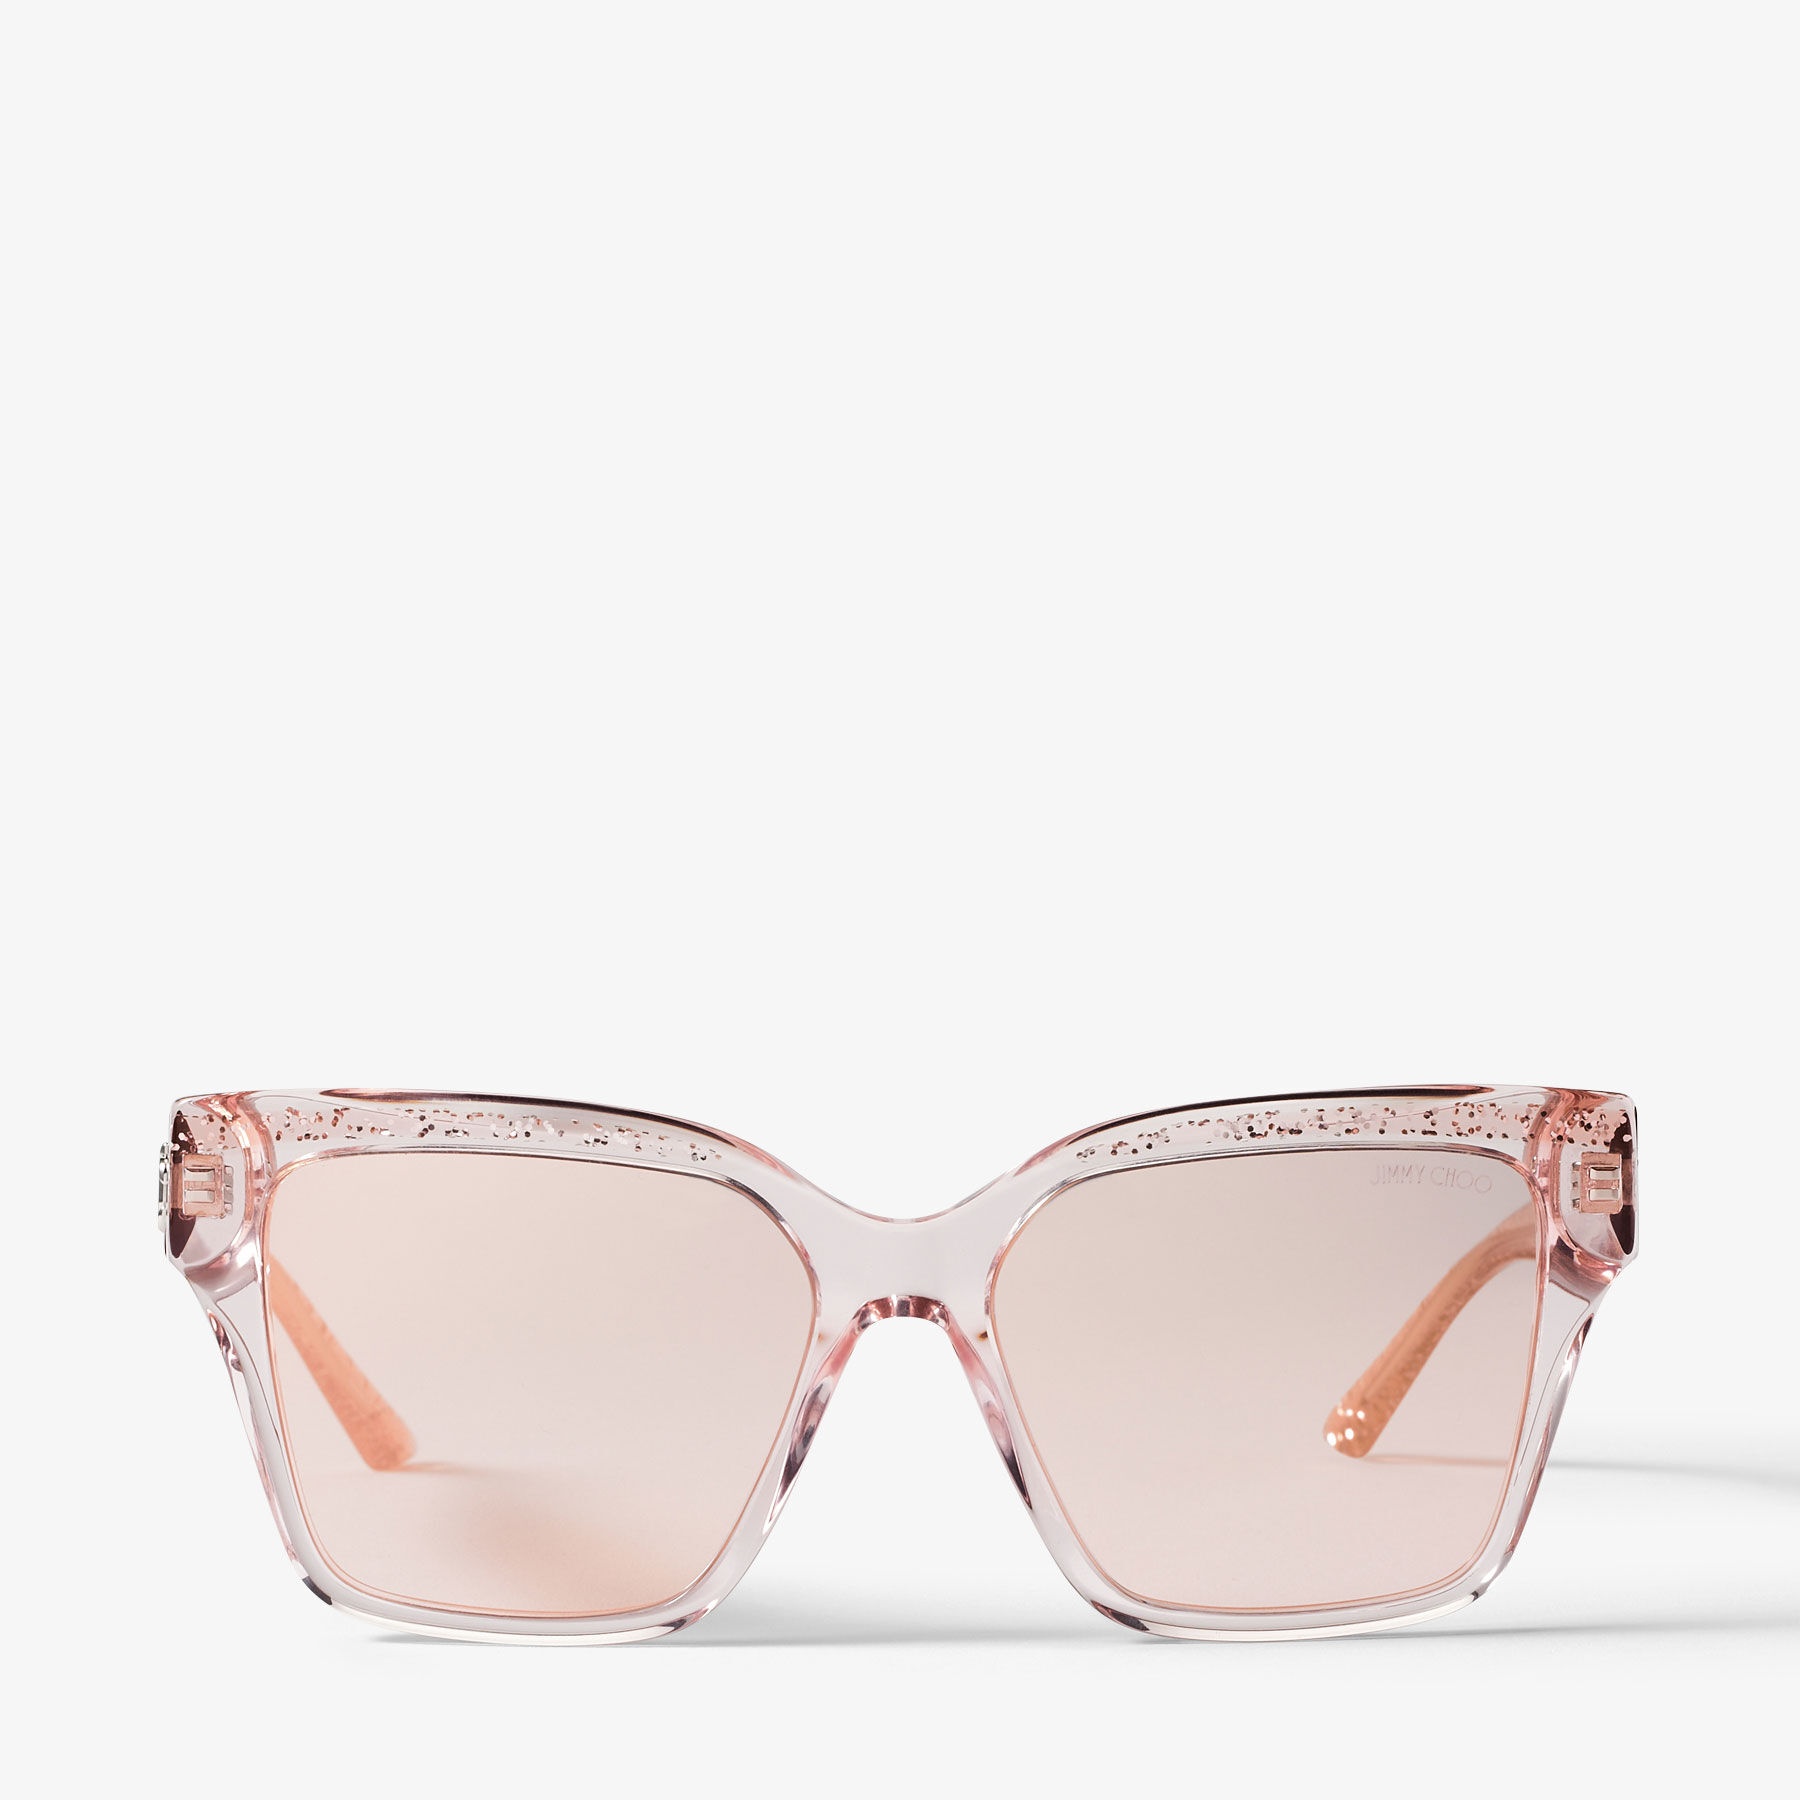 Giava
Pink Glitter Square Sunglasses - 1